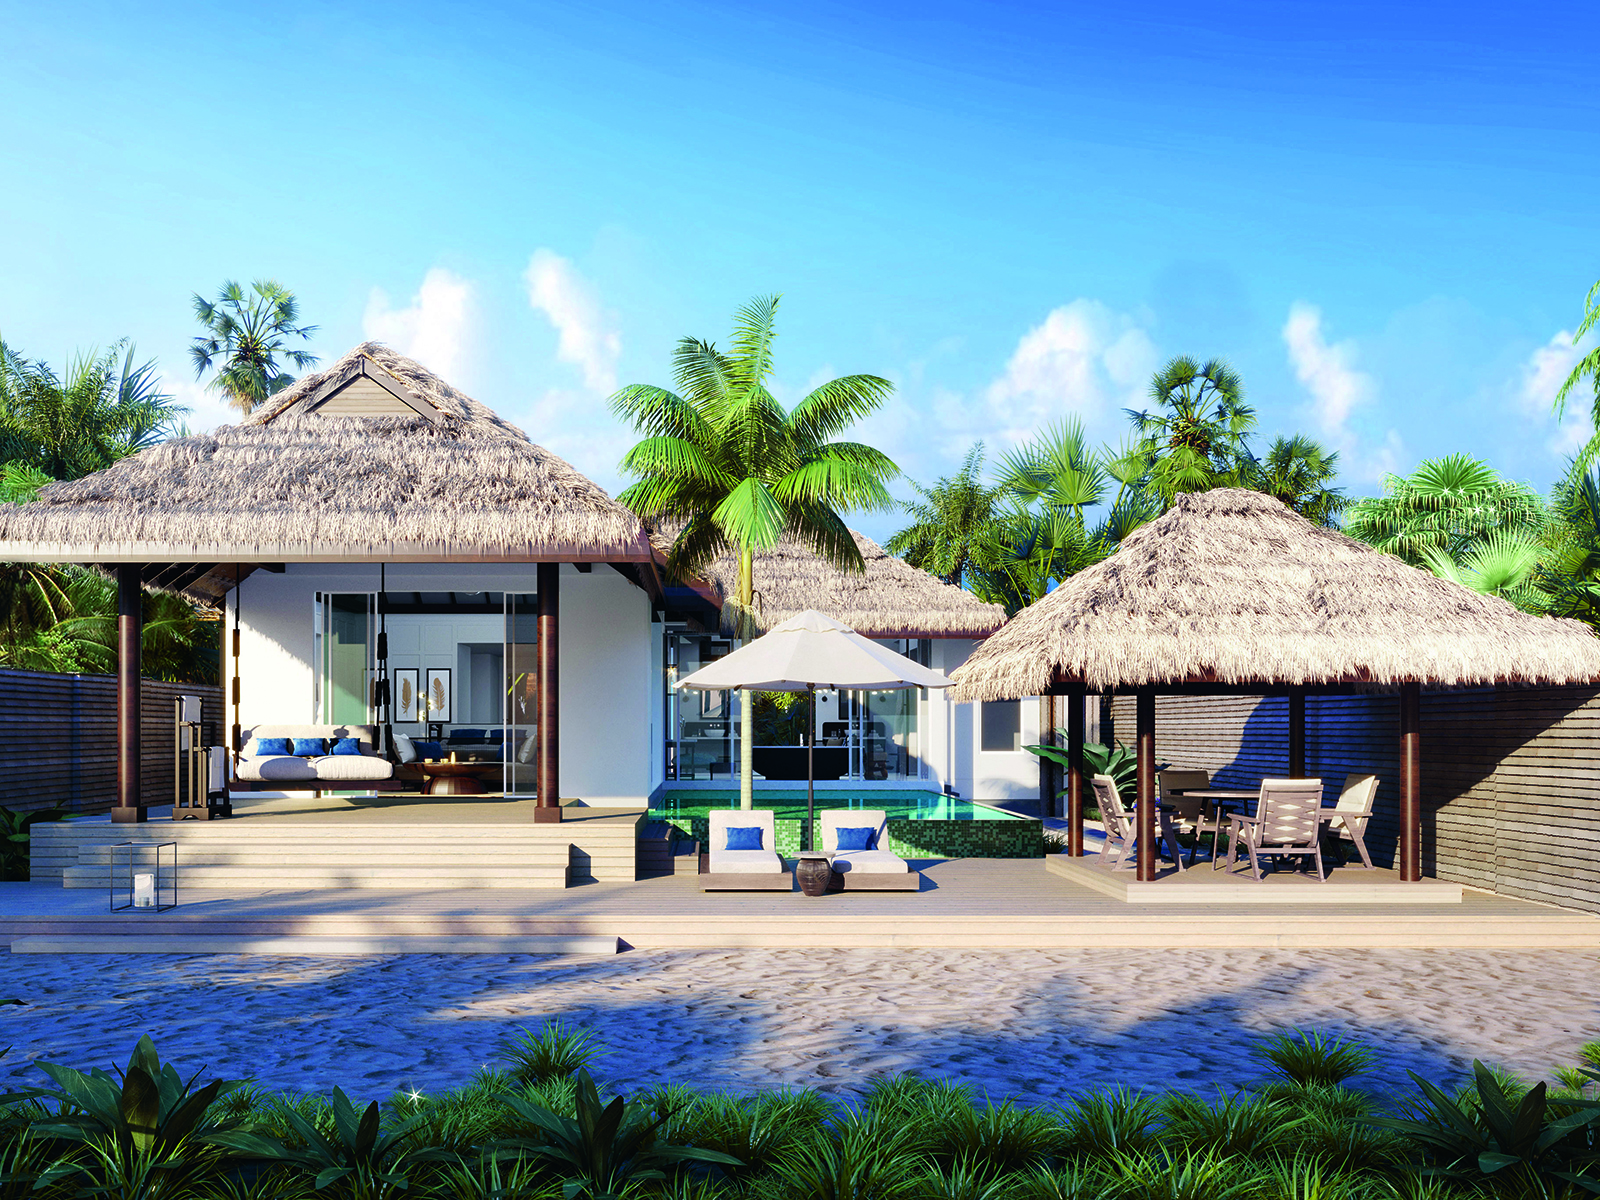 Beach front accommodation set within palm trees, Maldives